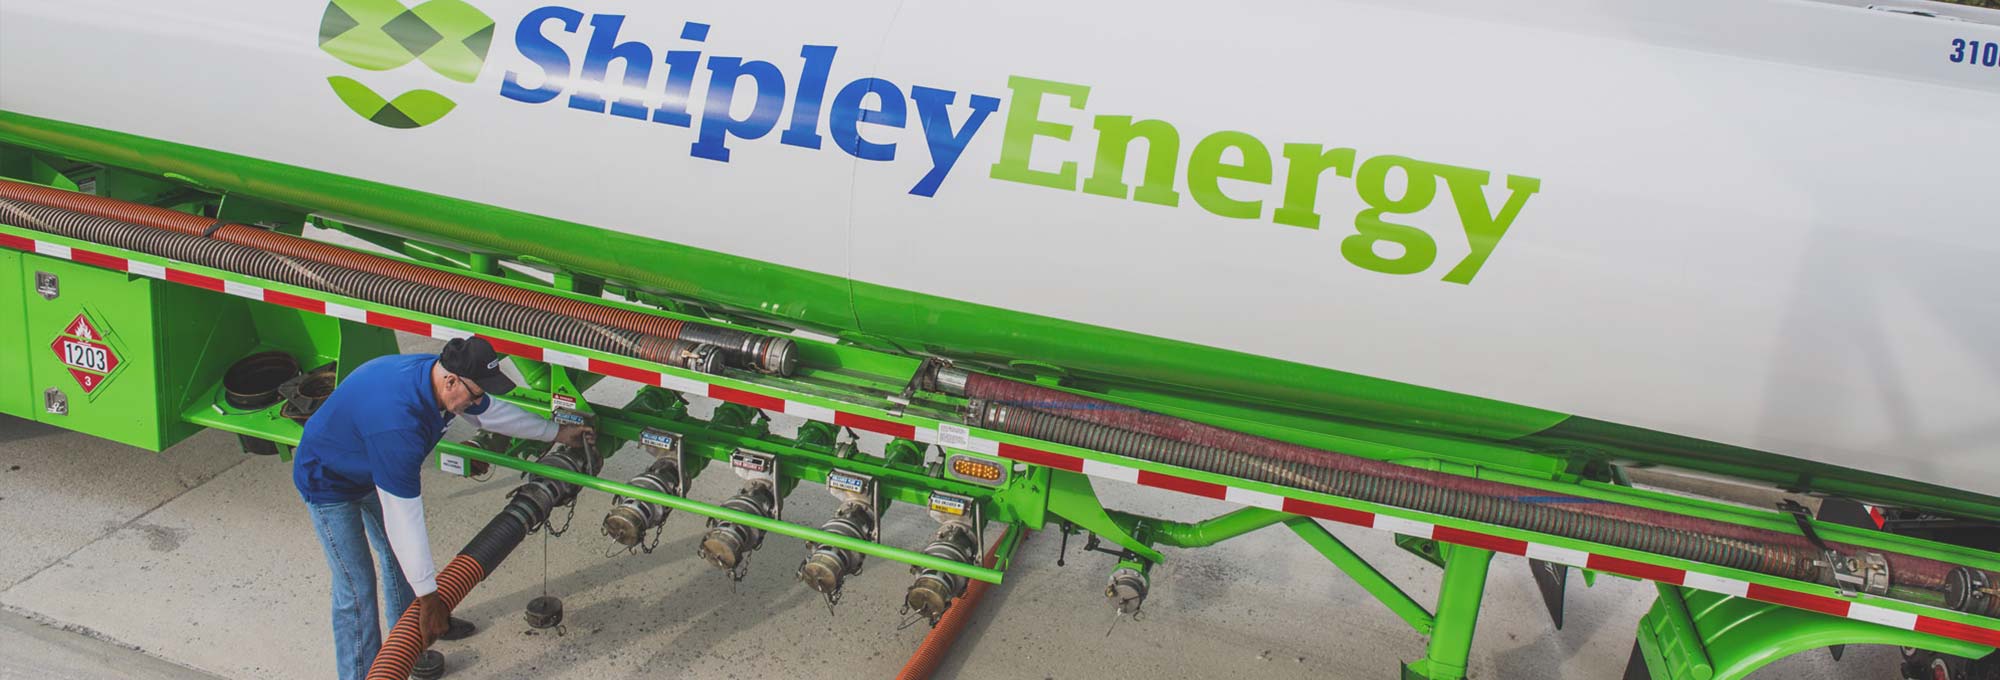 Trust Shipley Energy to Keep You Warm